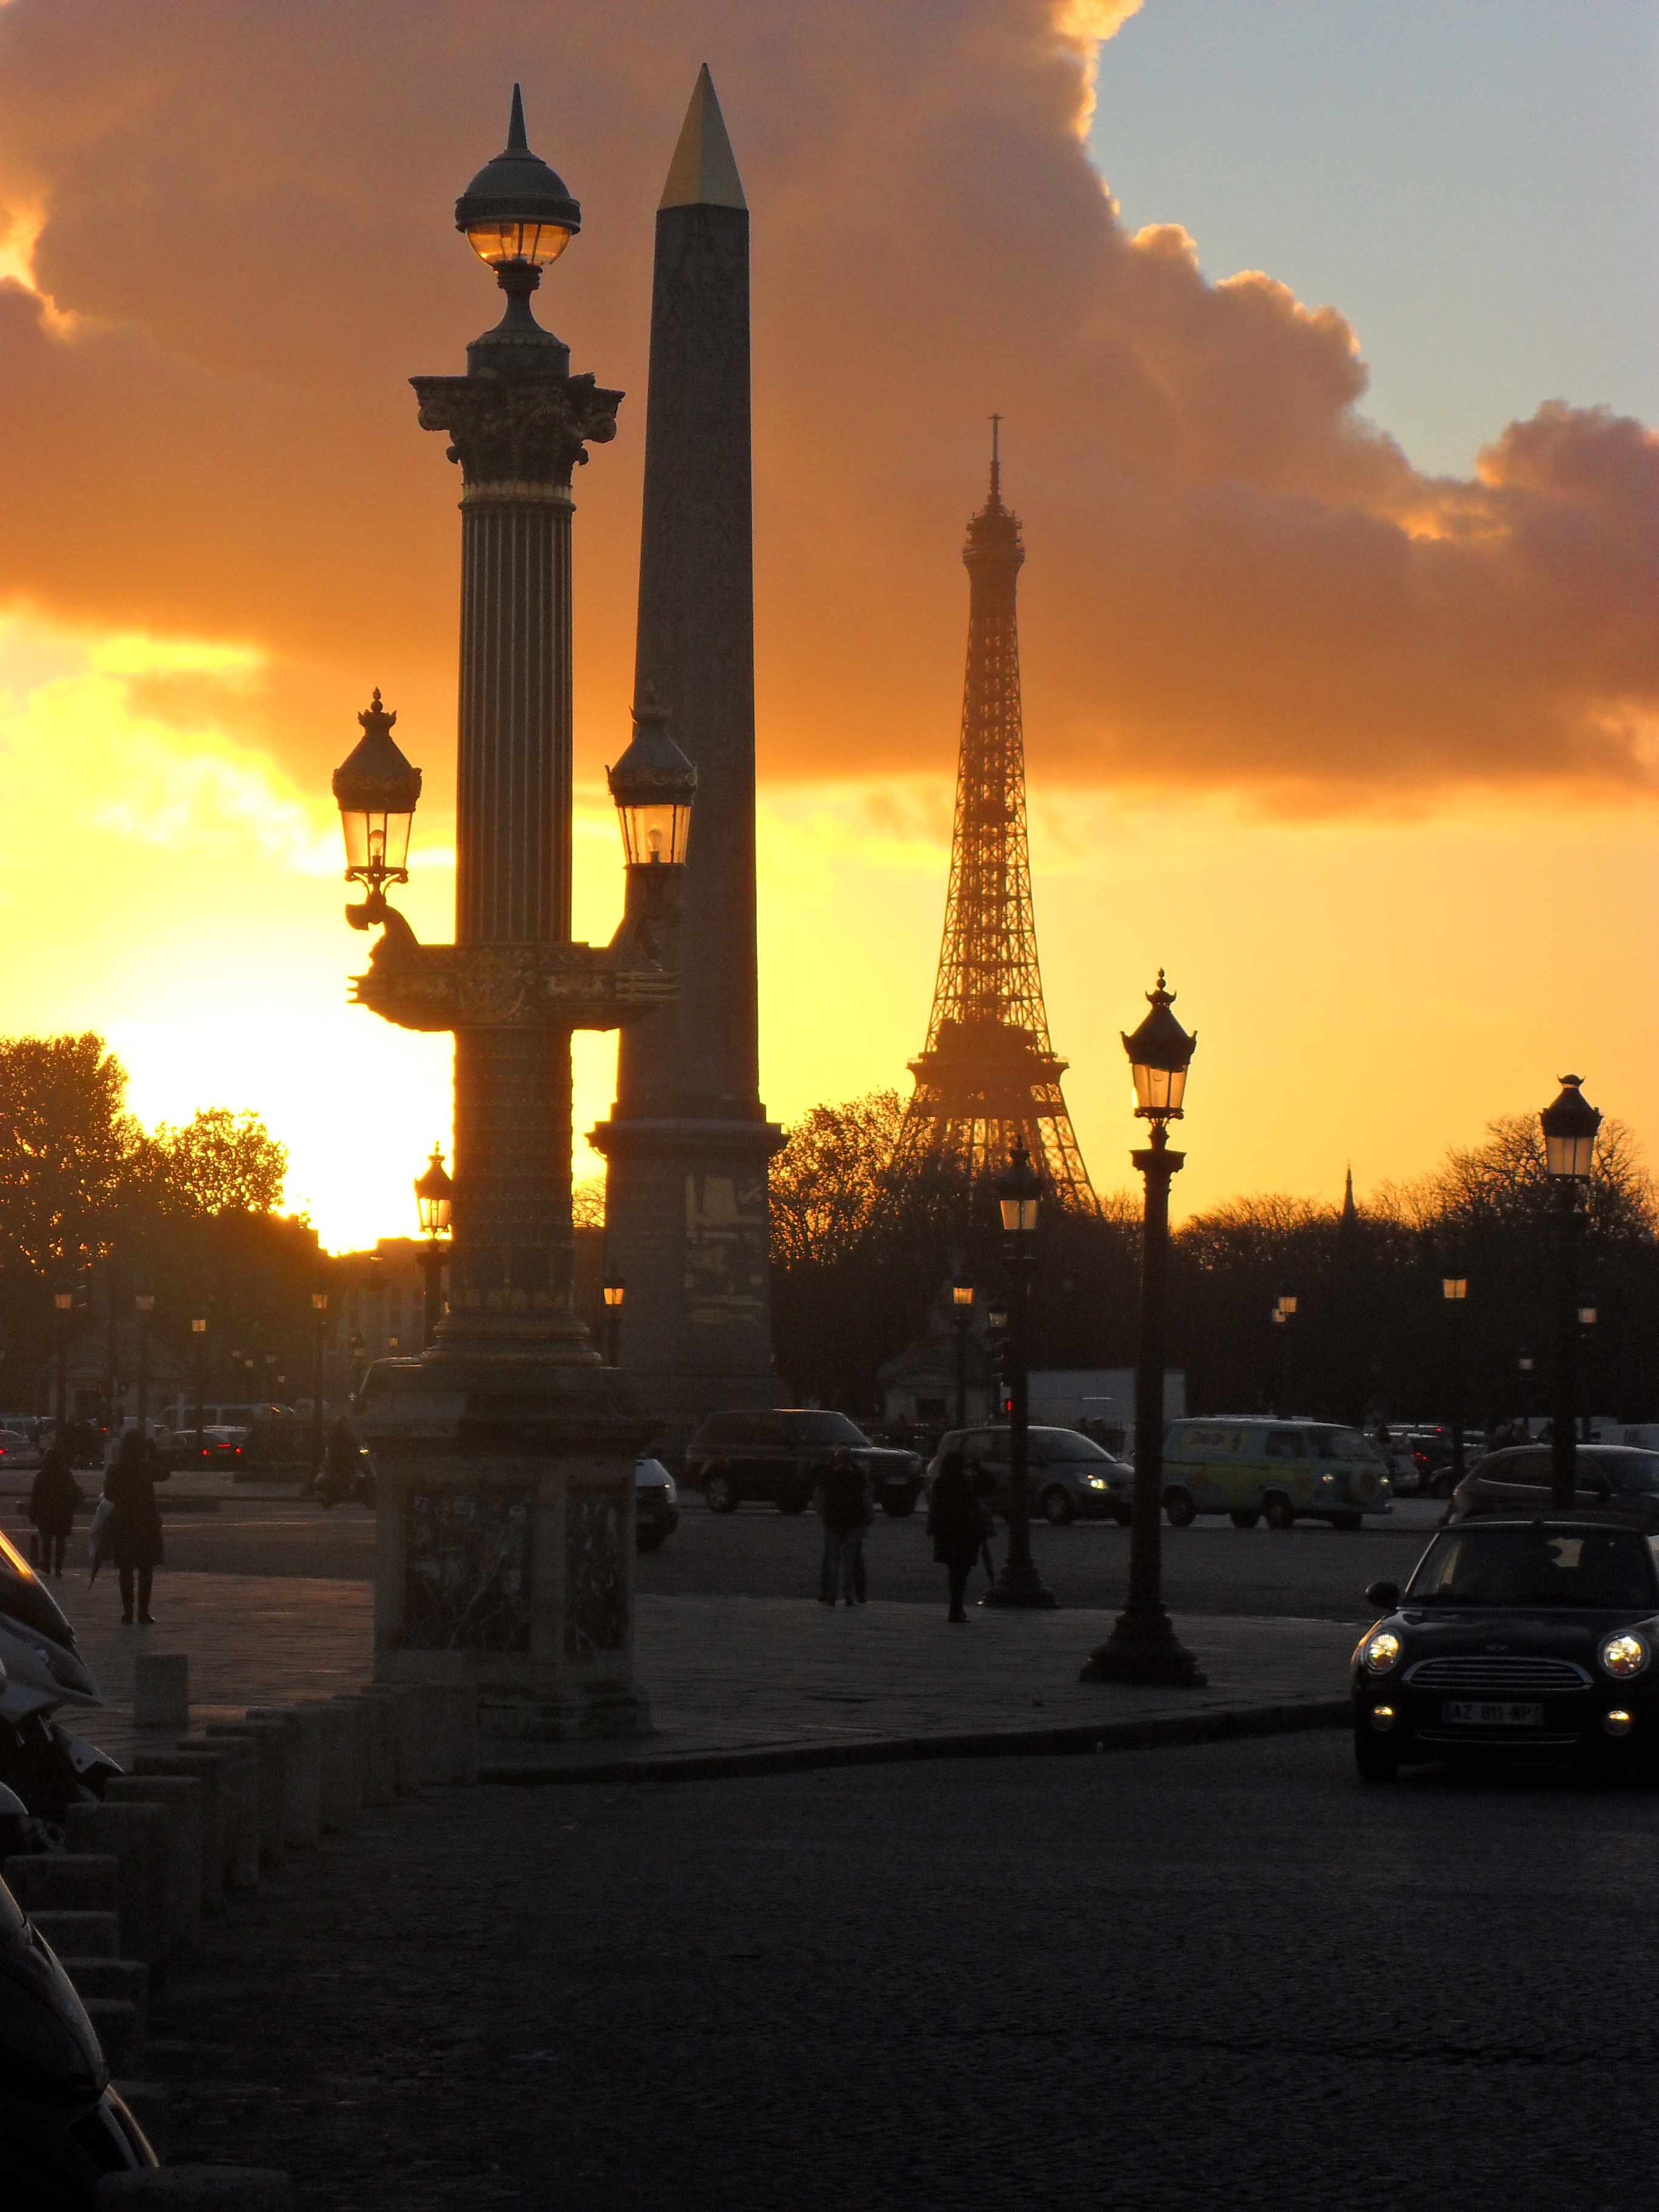 My Trip To Paris